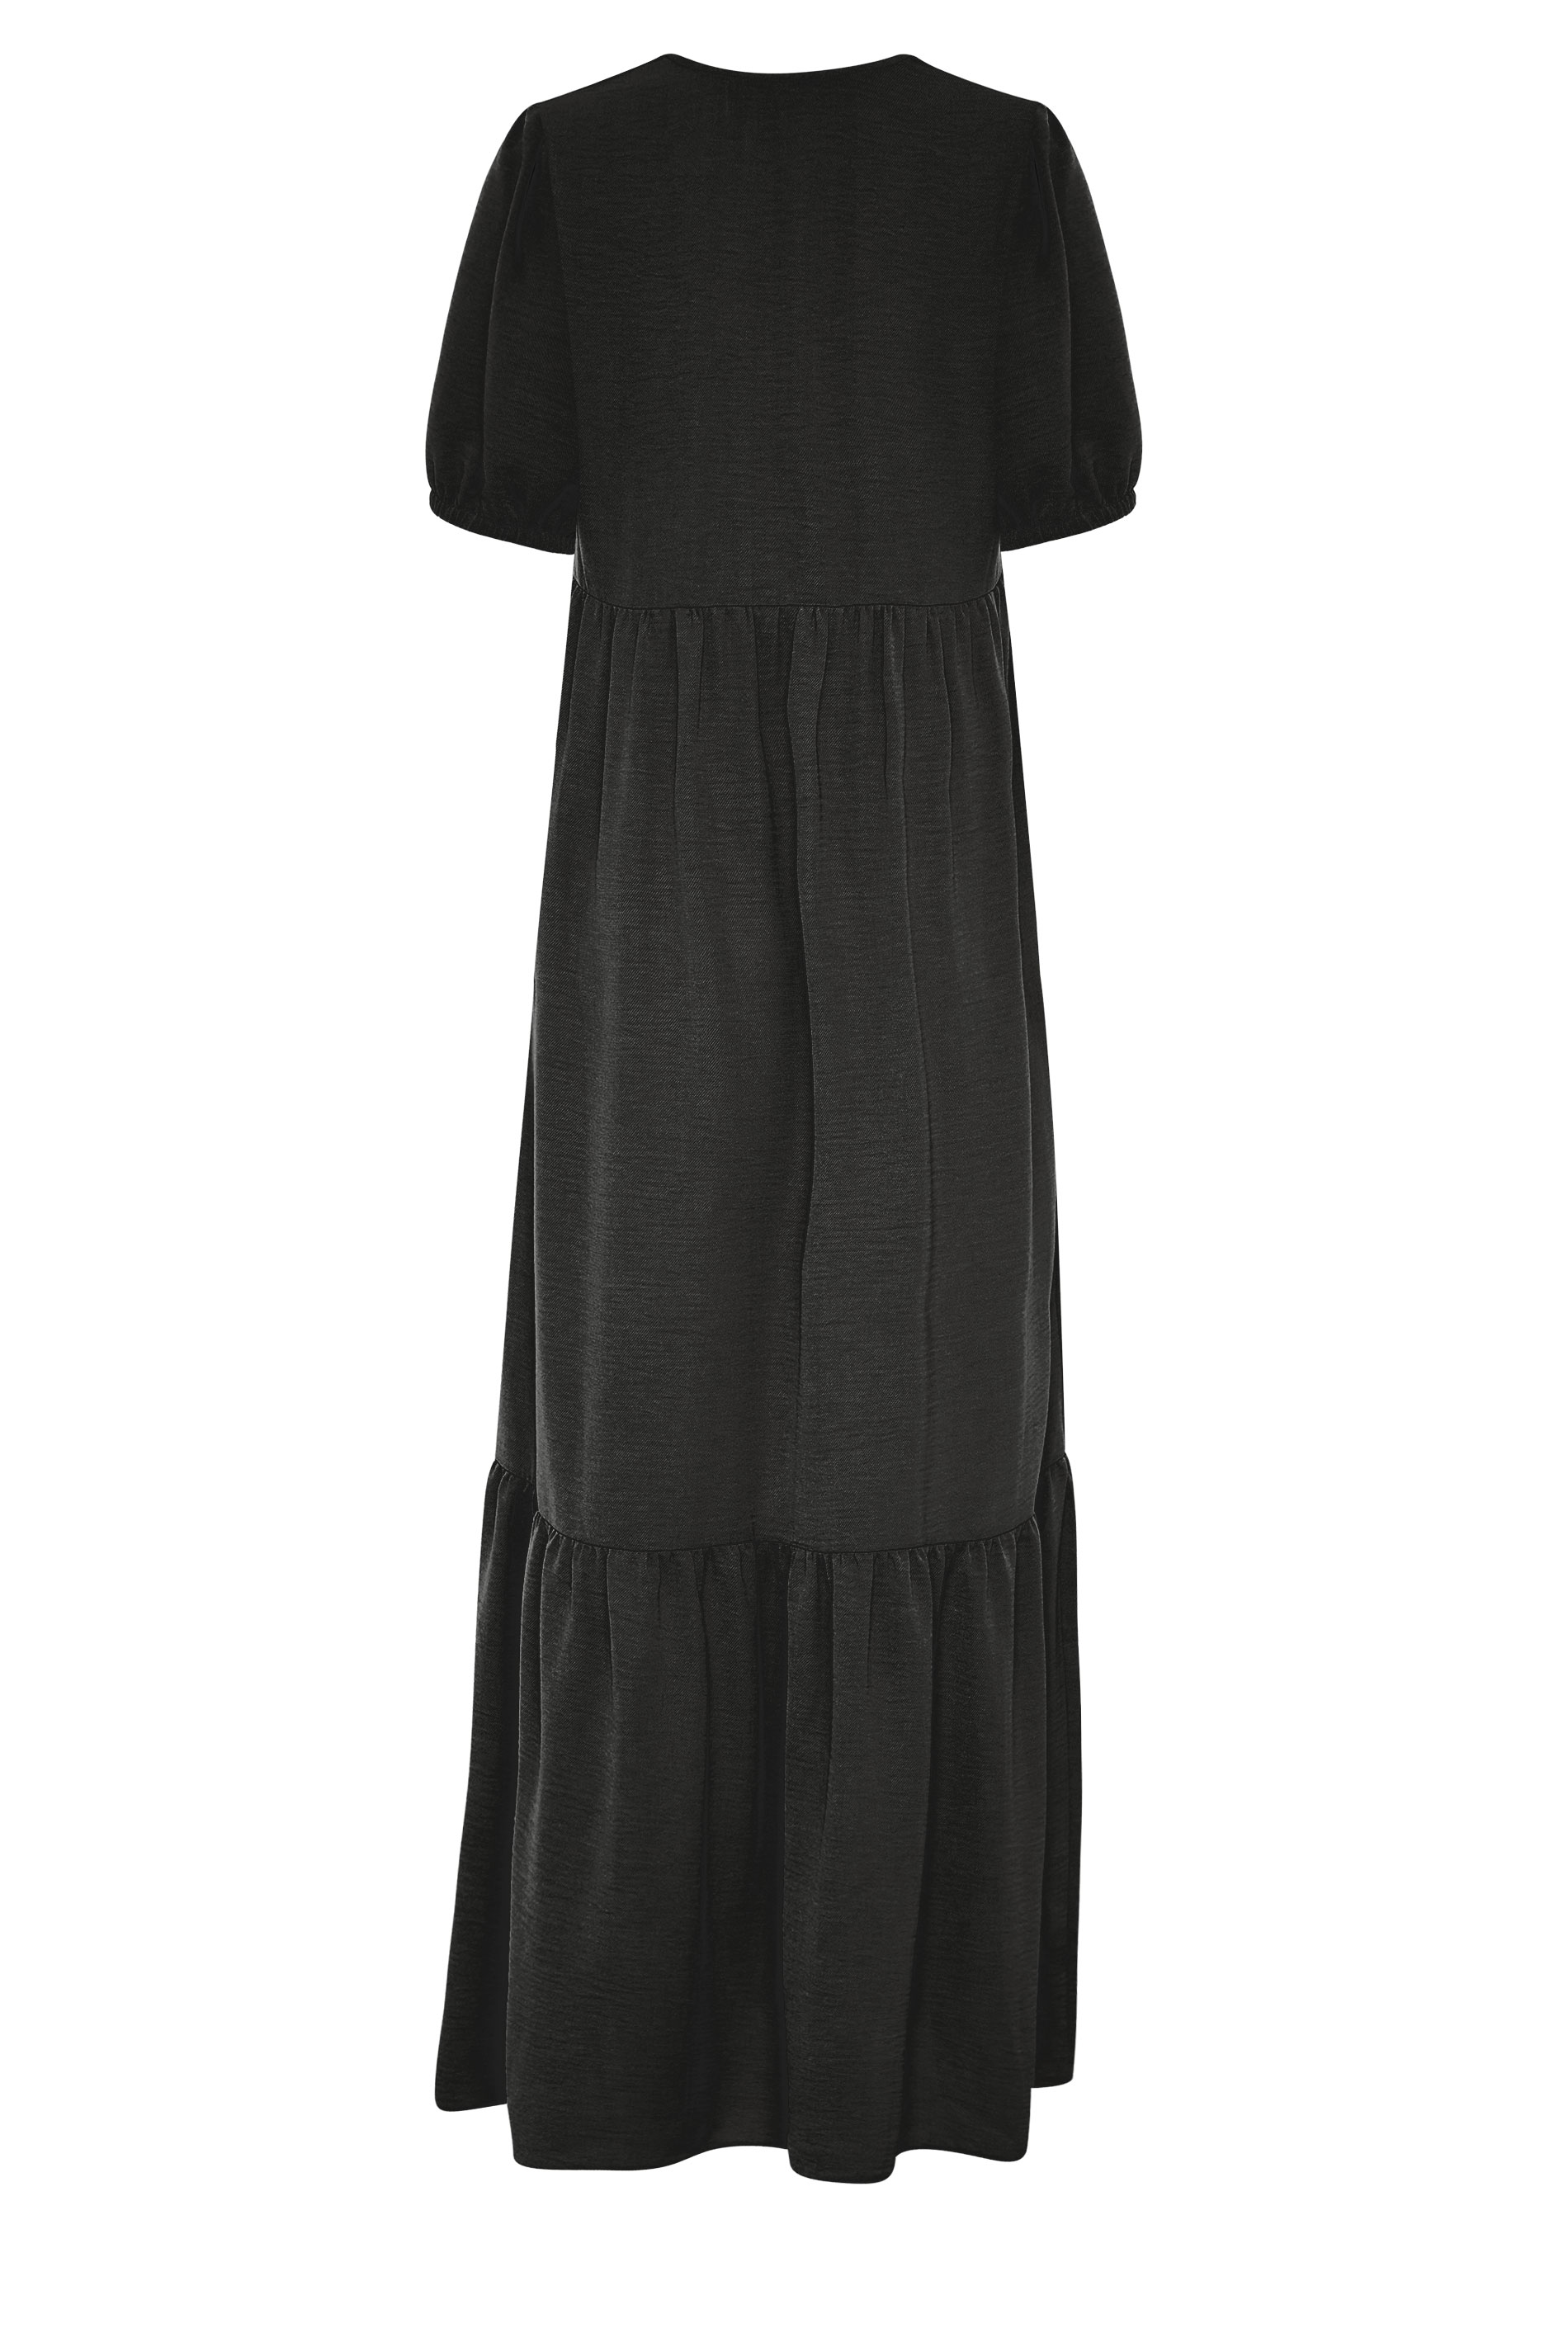 LTS Black Tiered Smock Midaxi Dress | Long Tall Sally